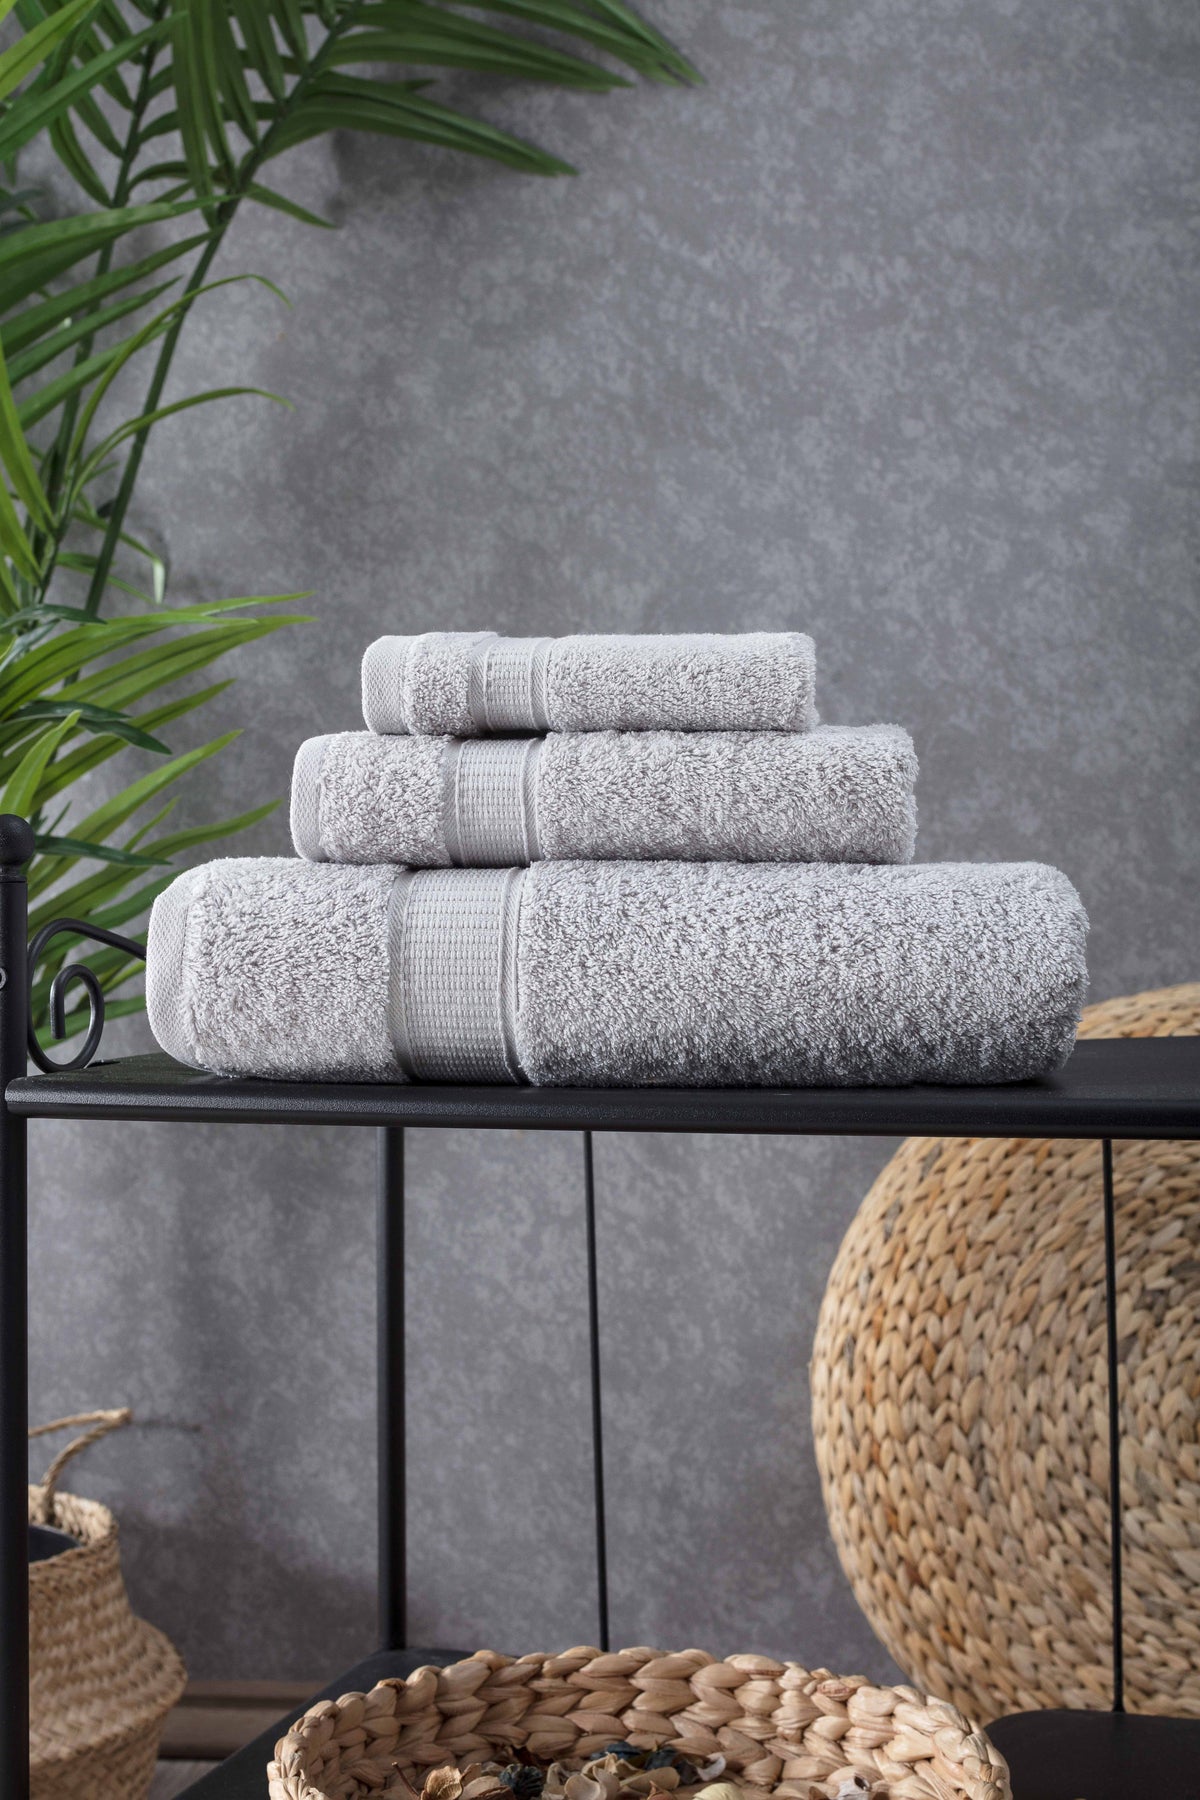 Turkish Cotton Bath Towel